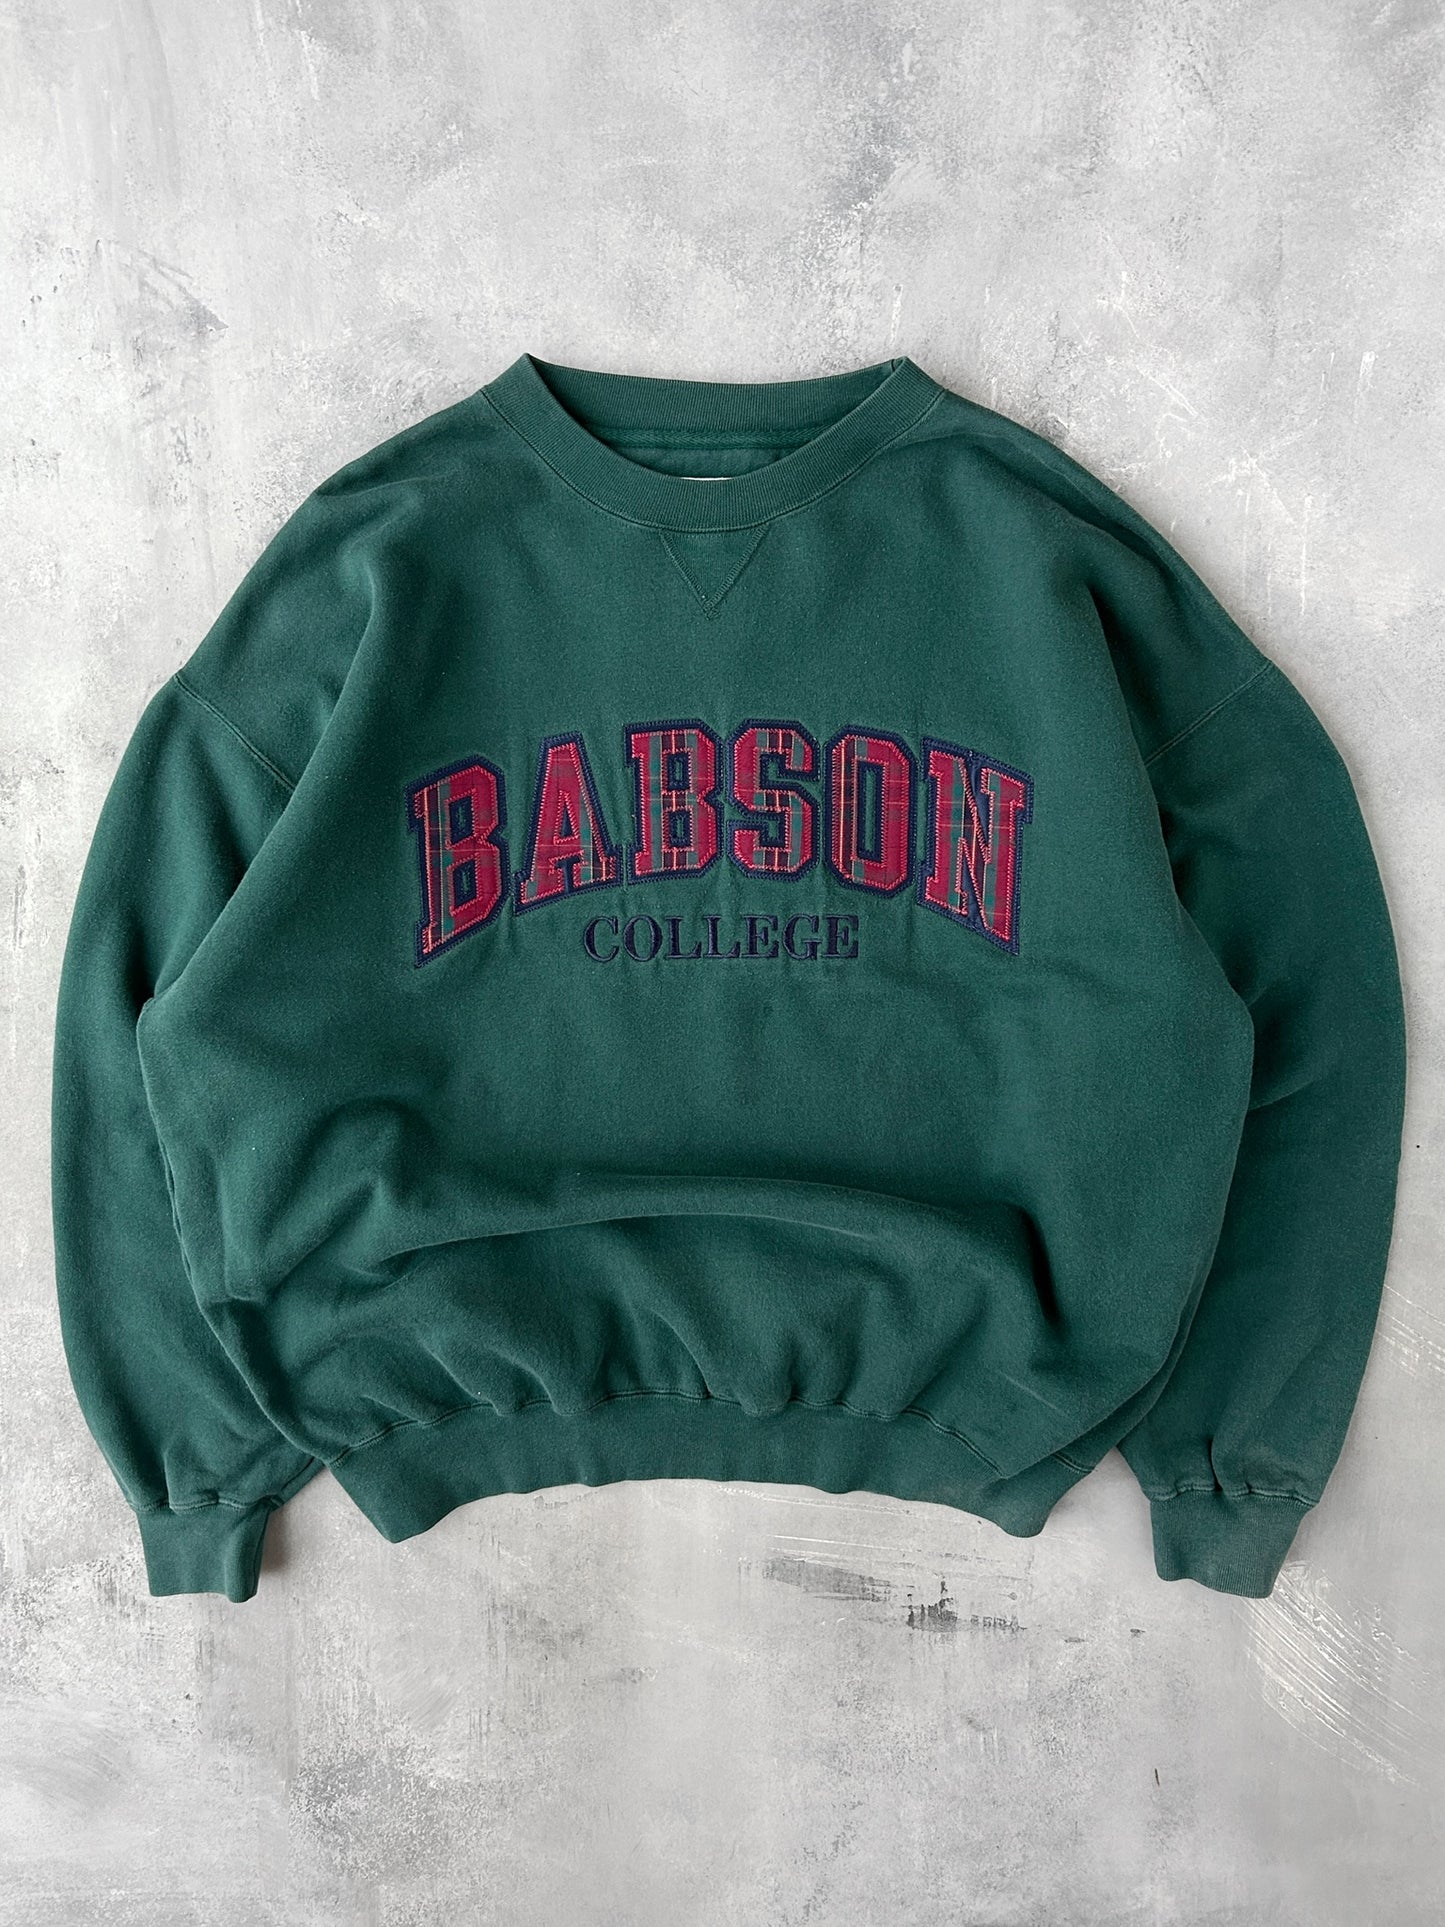 Babson College Sweatshirt 90's - XL